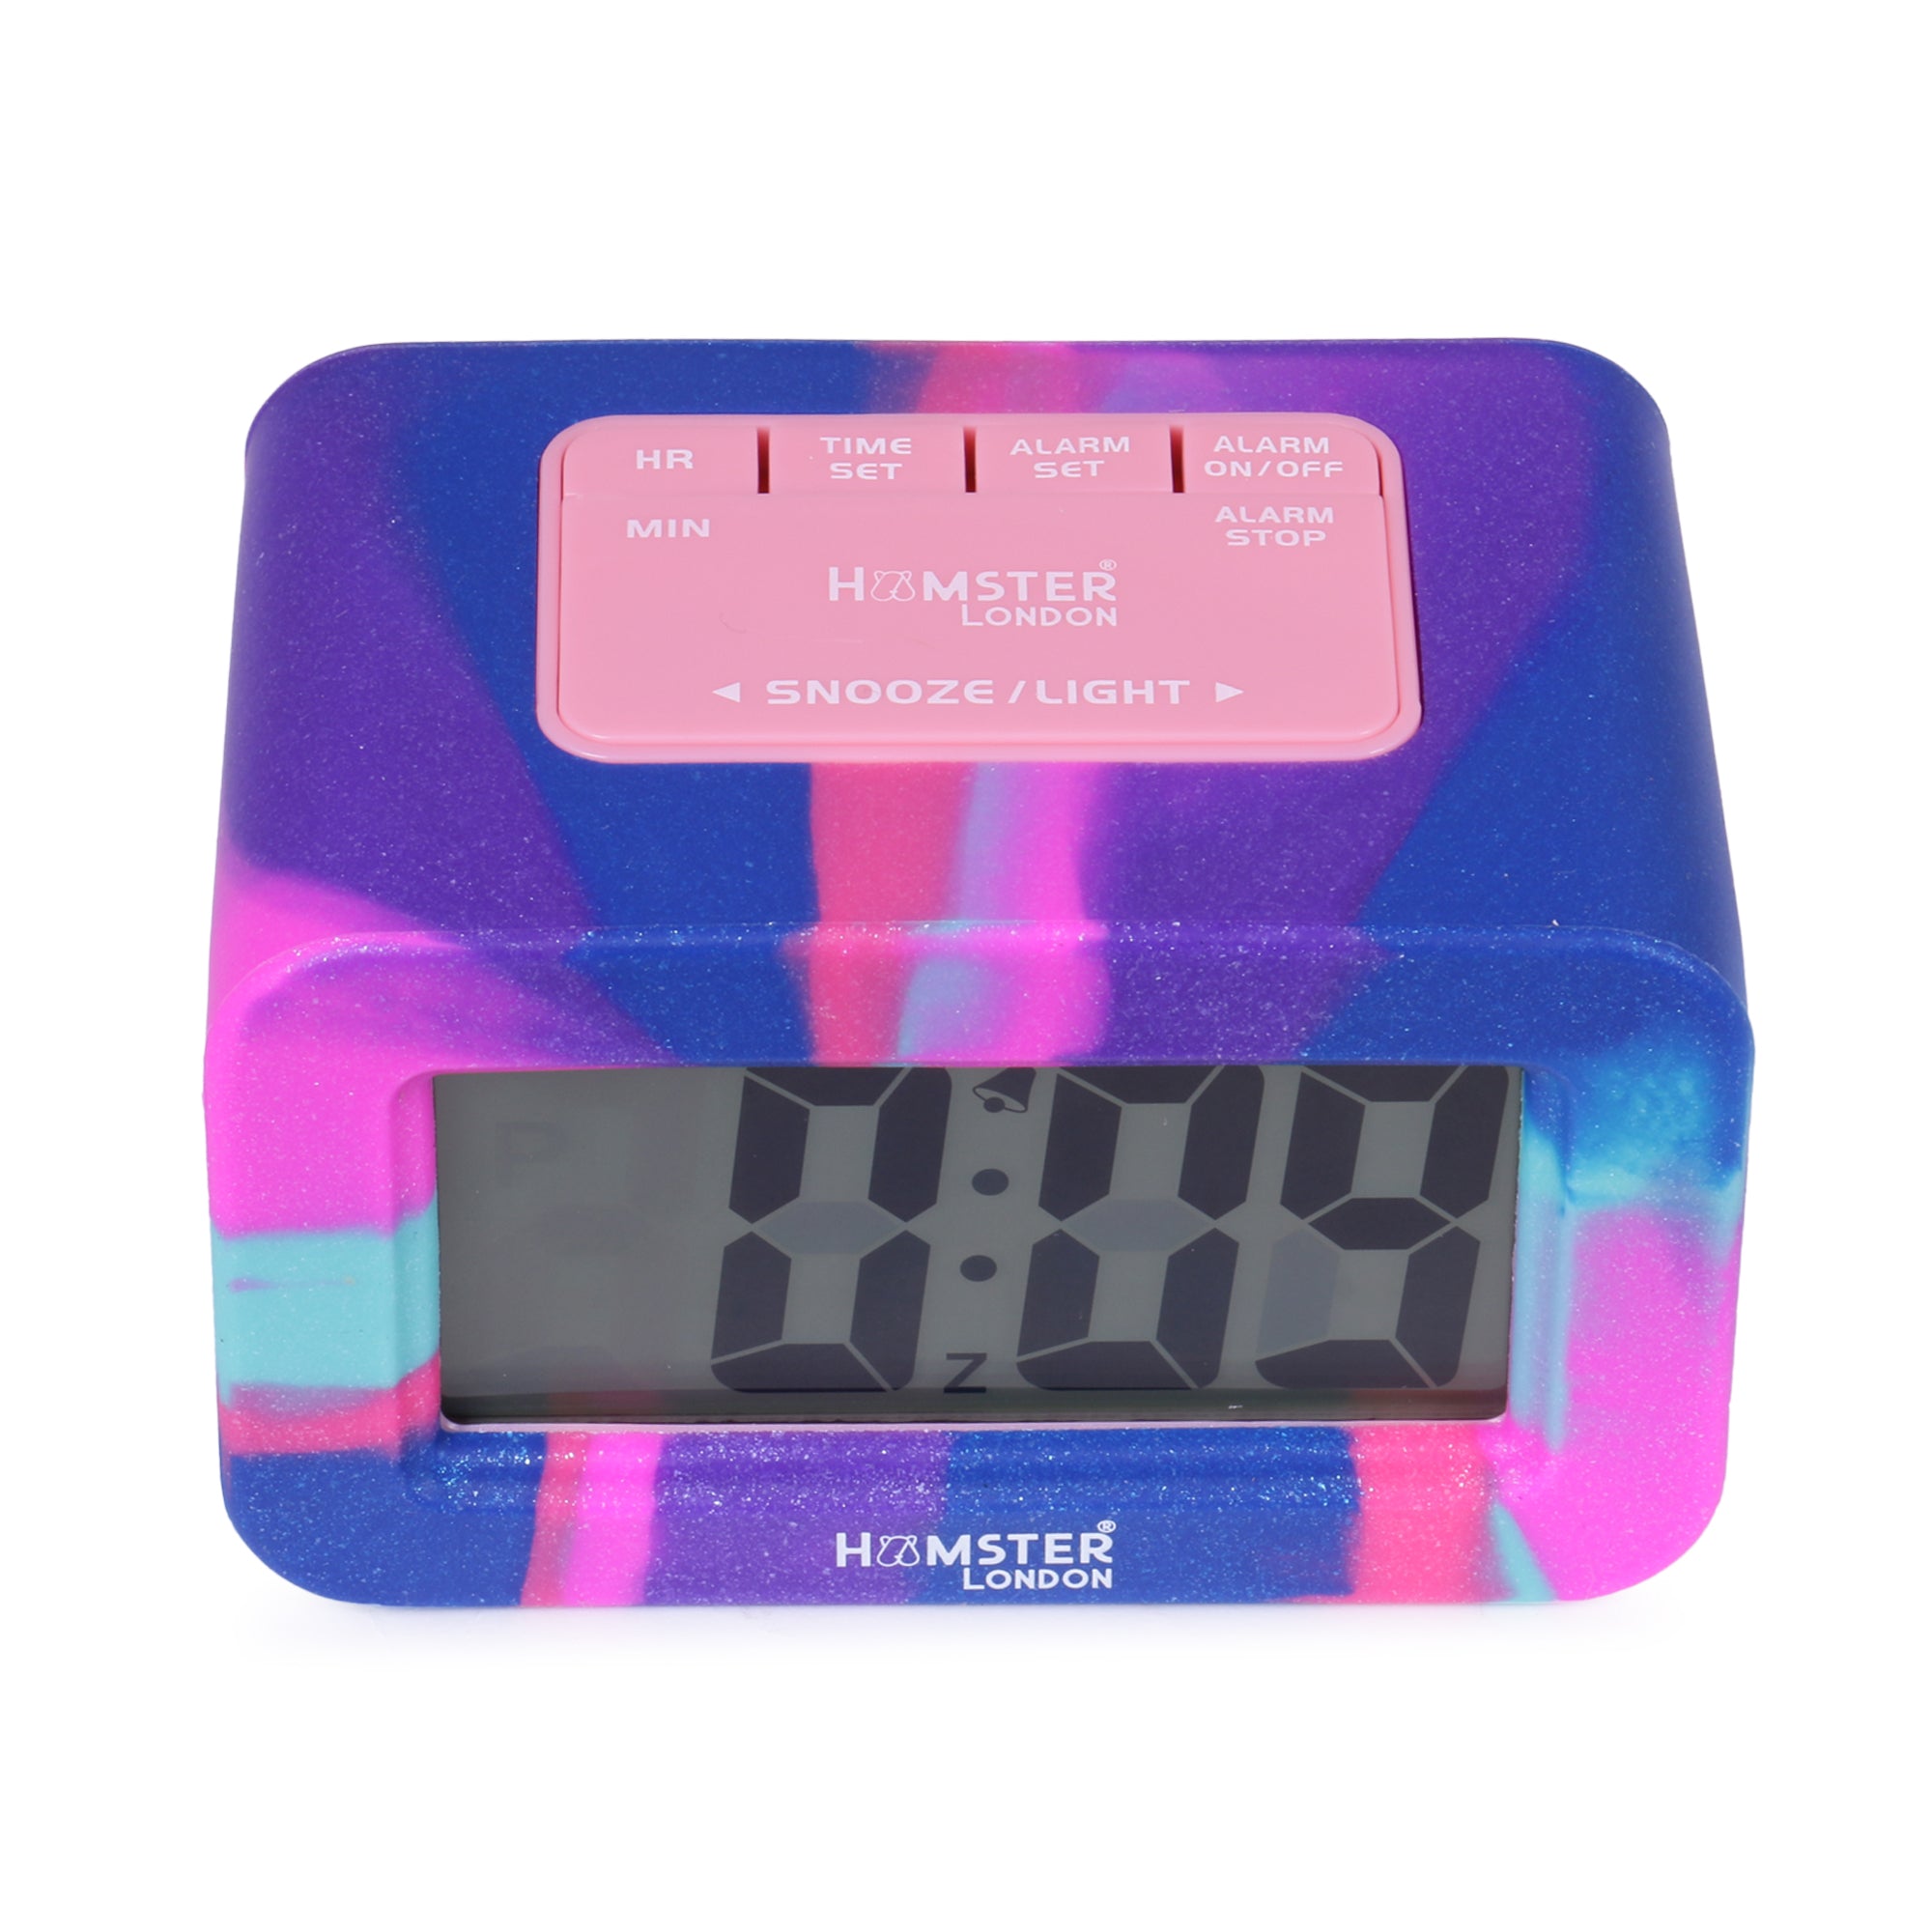 pink digital clock